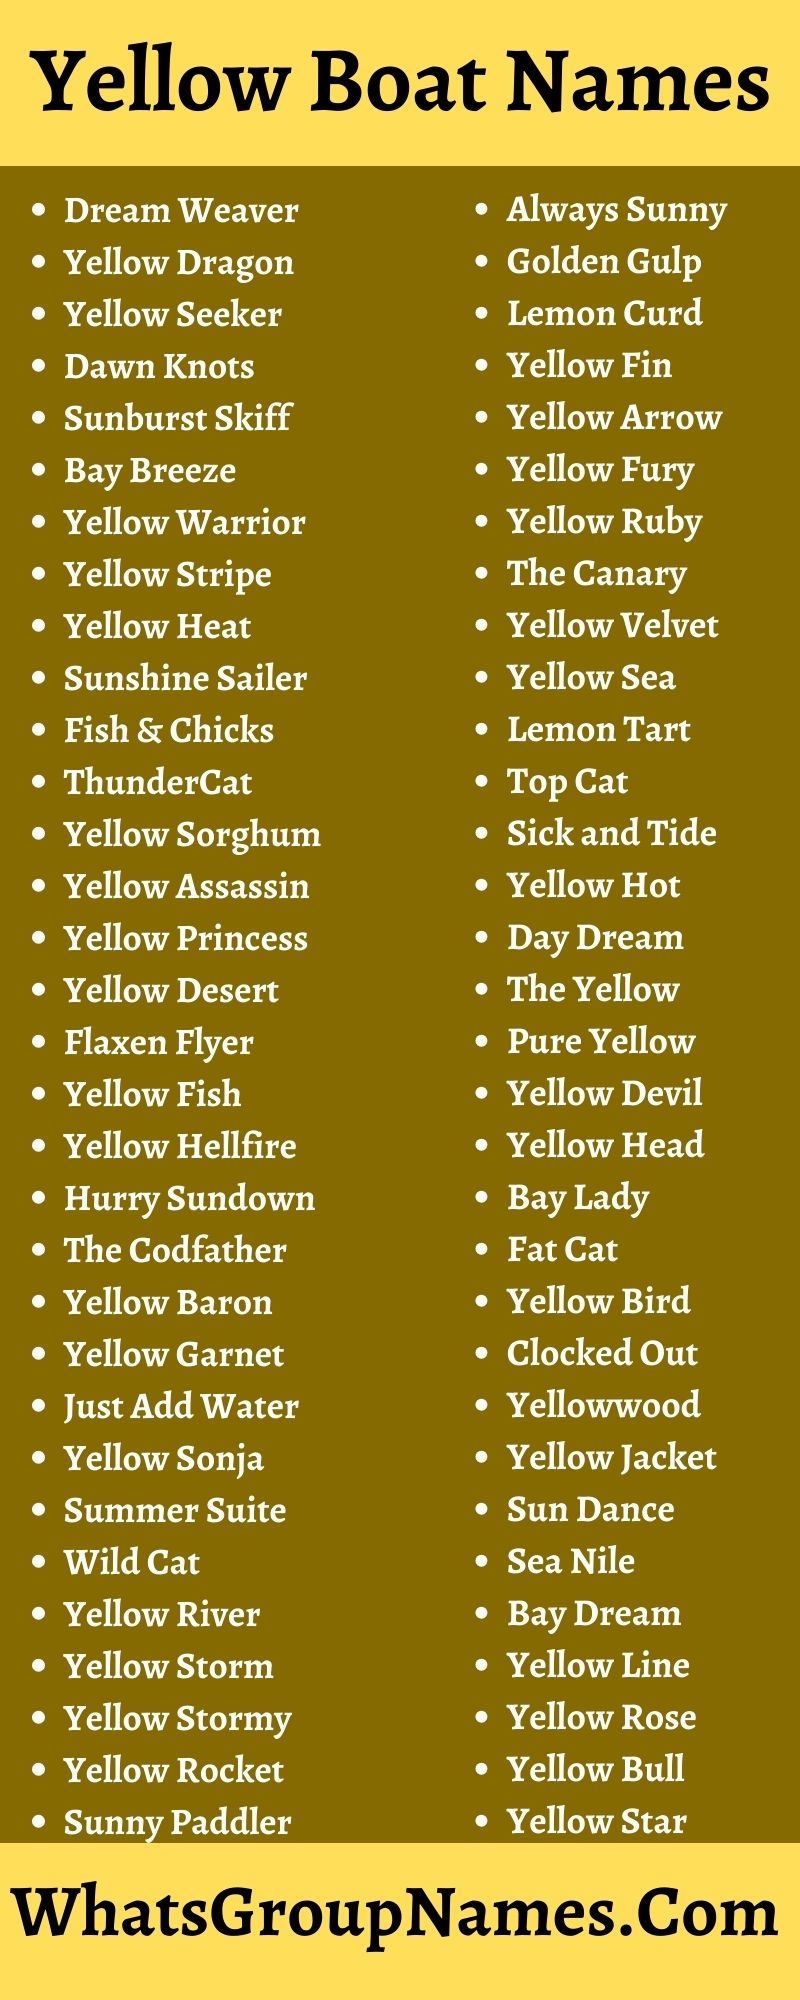 Yellow Boat Names